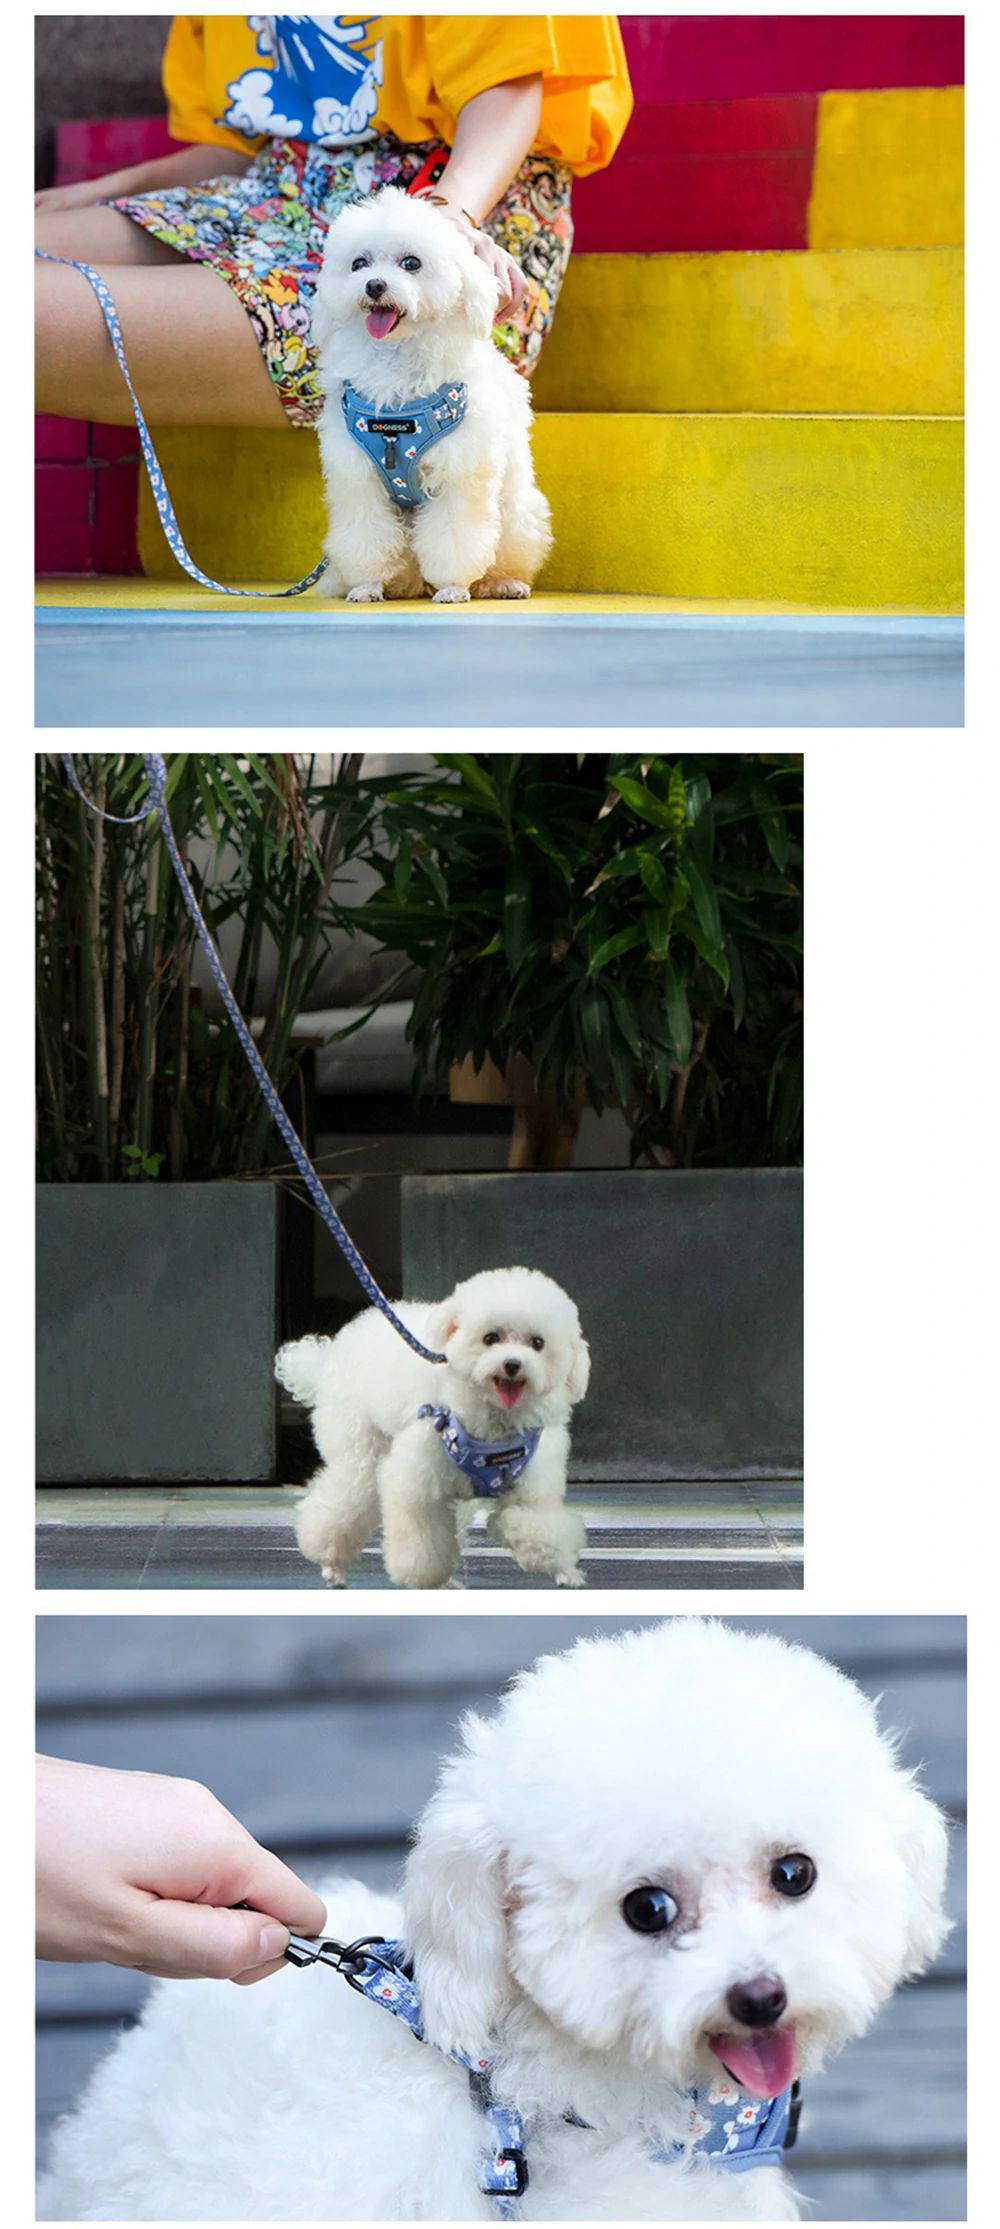 DOGNESS Harness Dog Leash Sets Adjustable Lengths Reflective Design Breathable Mesh Dogs Collar - Camouflage Green